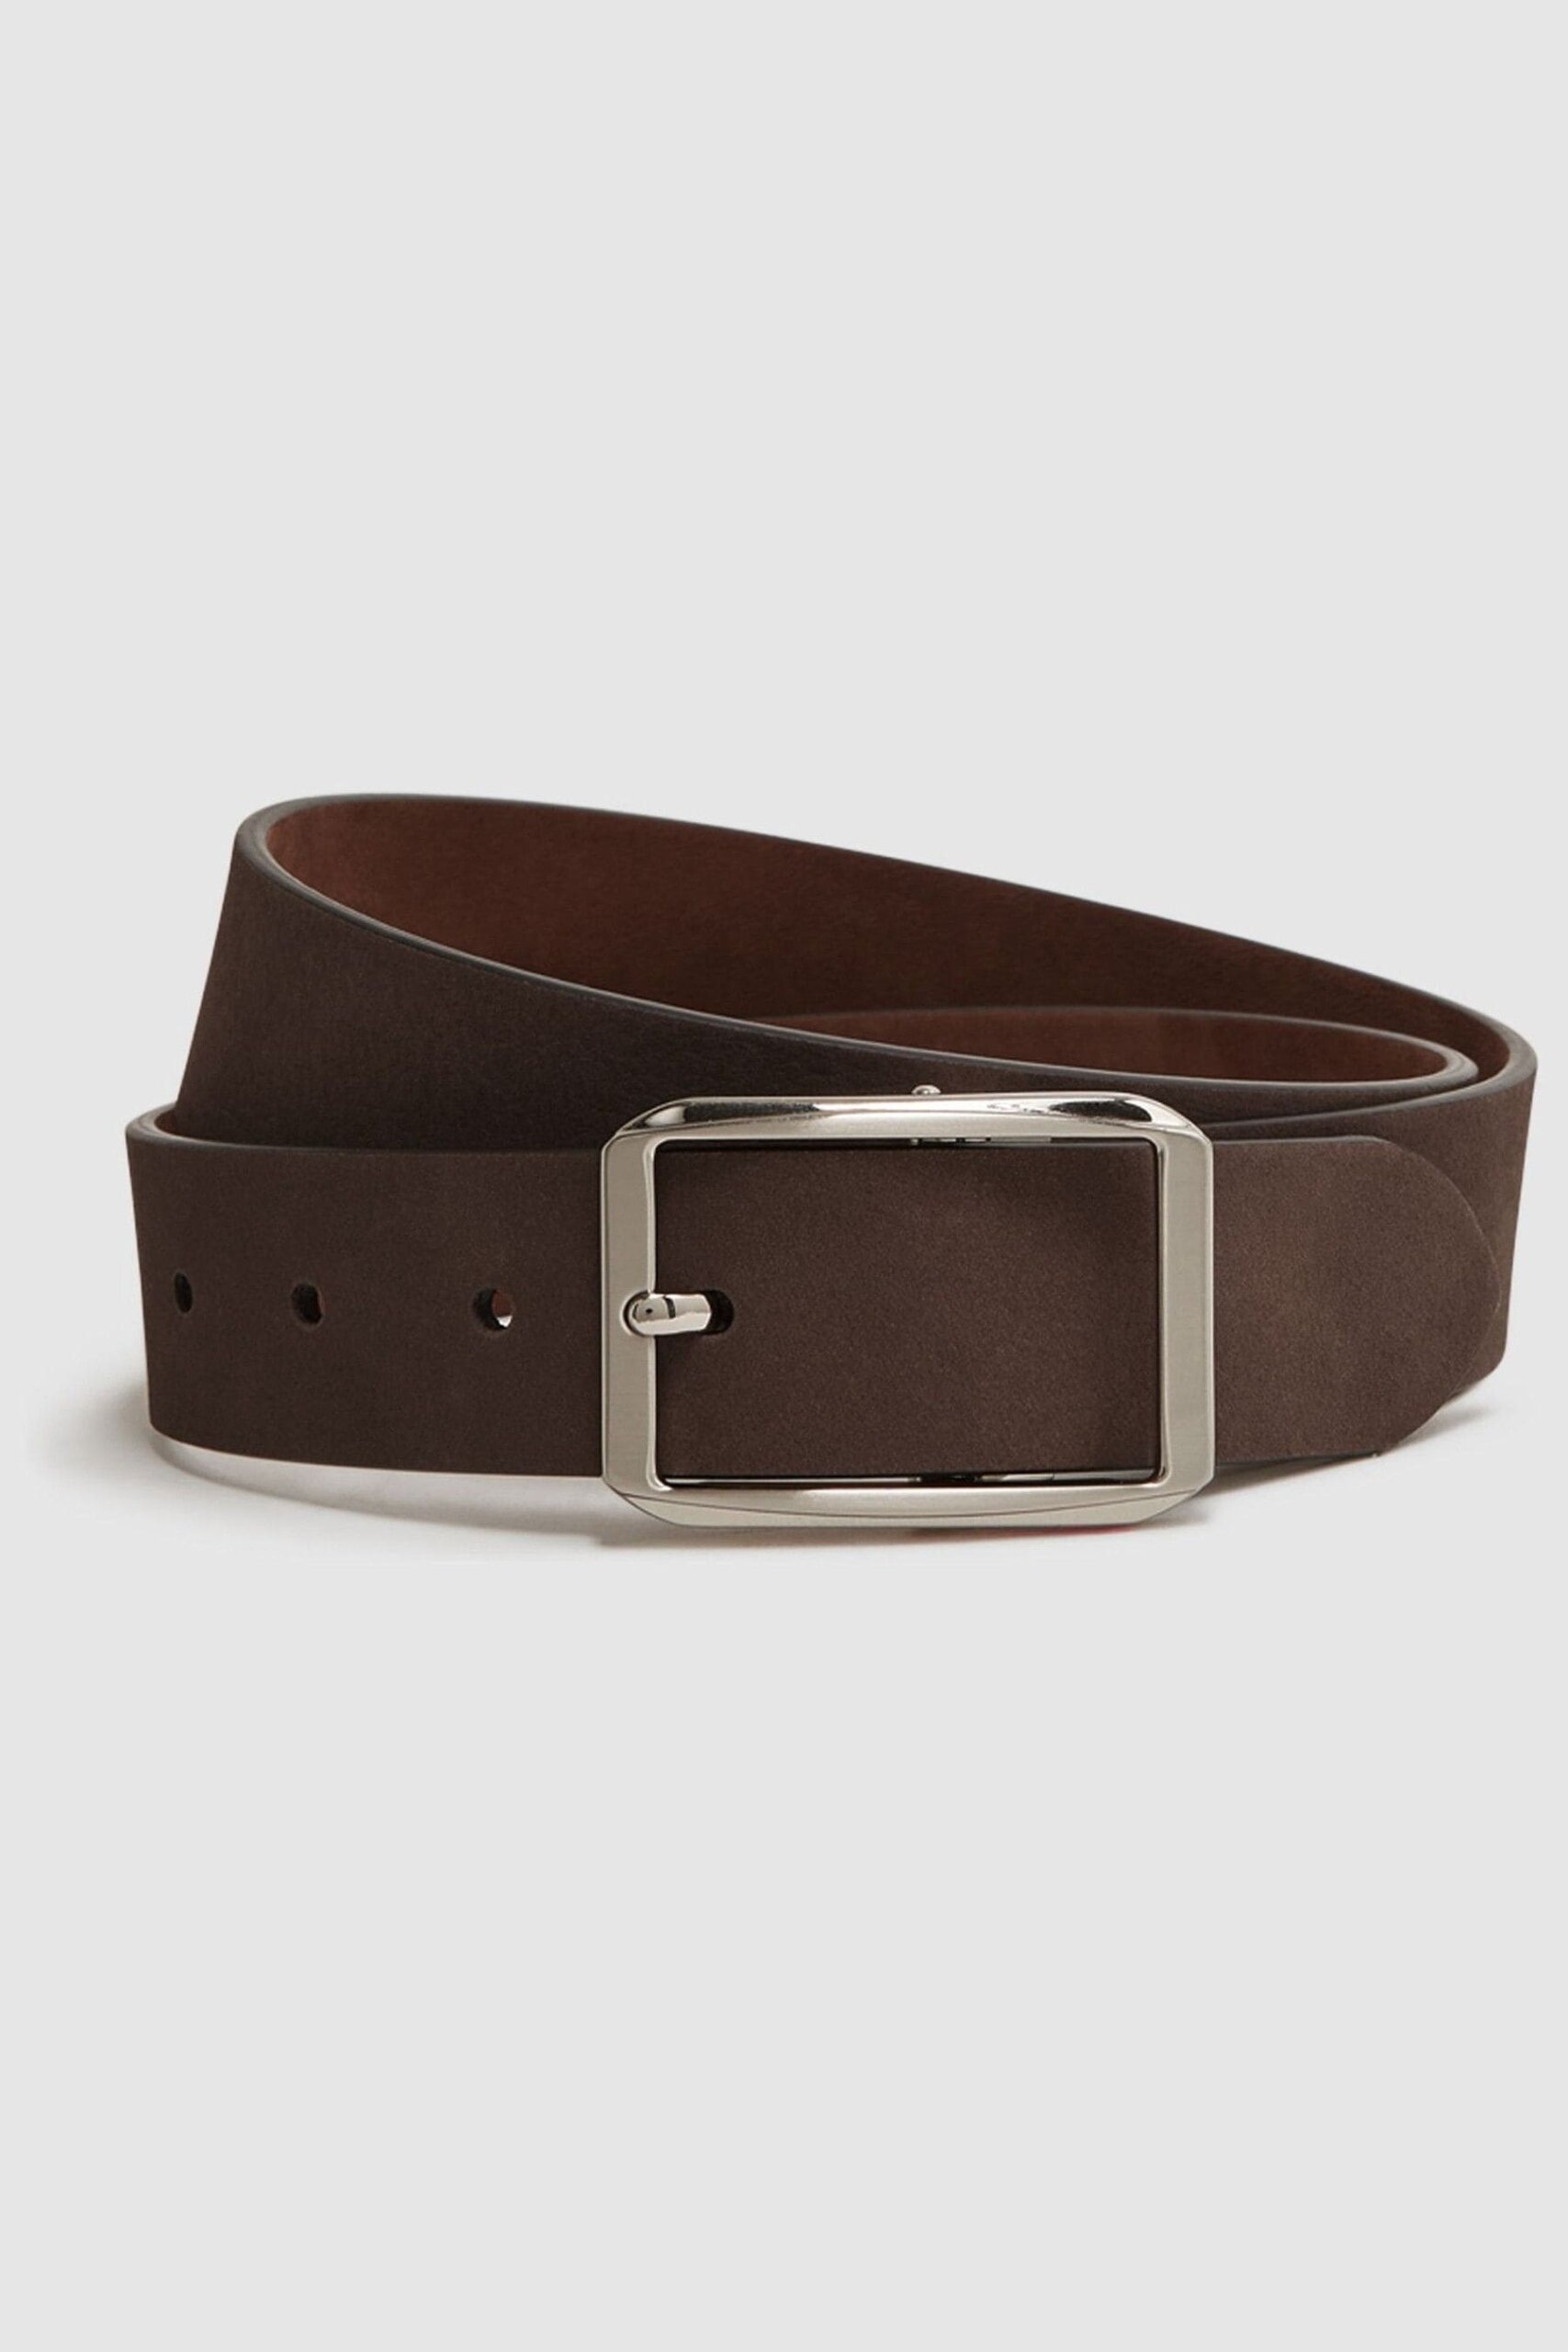 Rowan Nubuck Reversible Belt - Brown Leather Plain